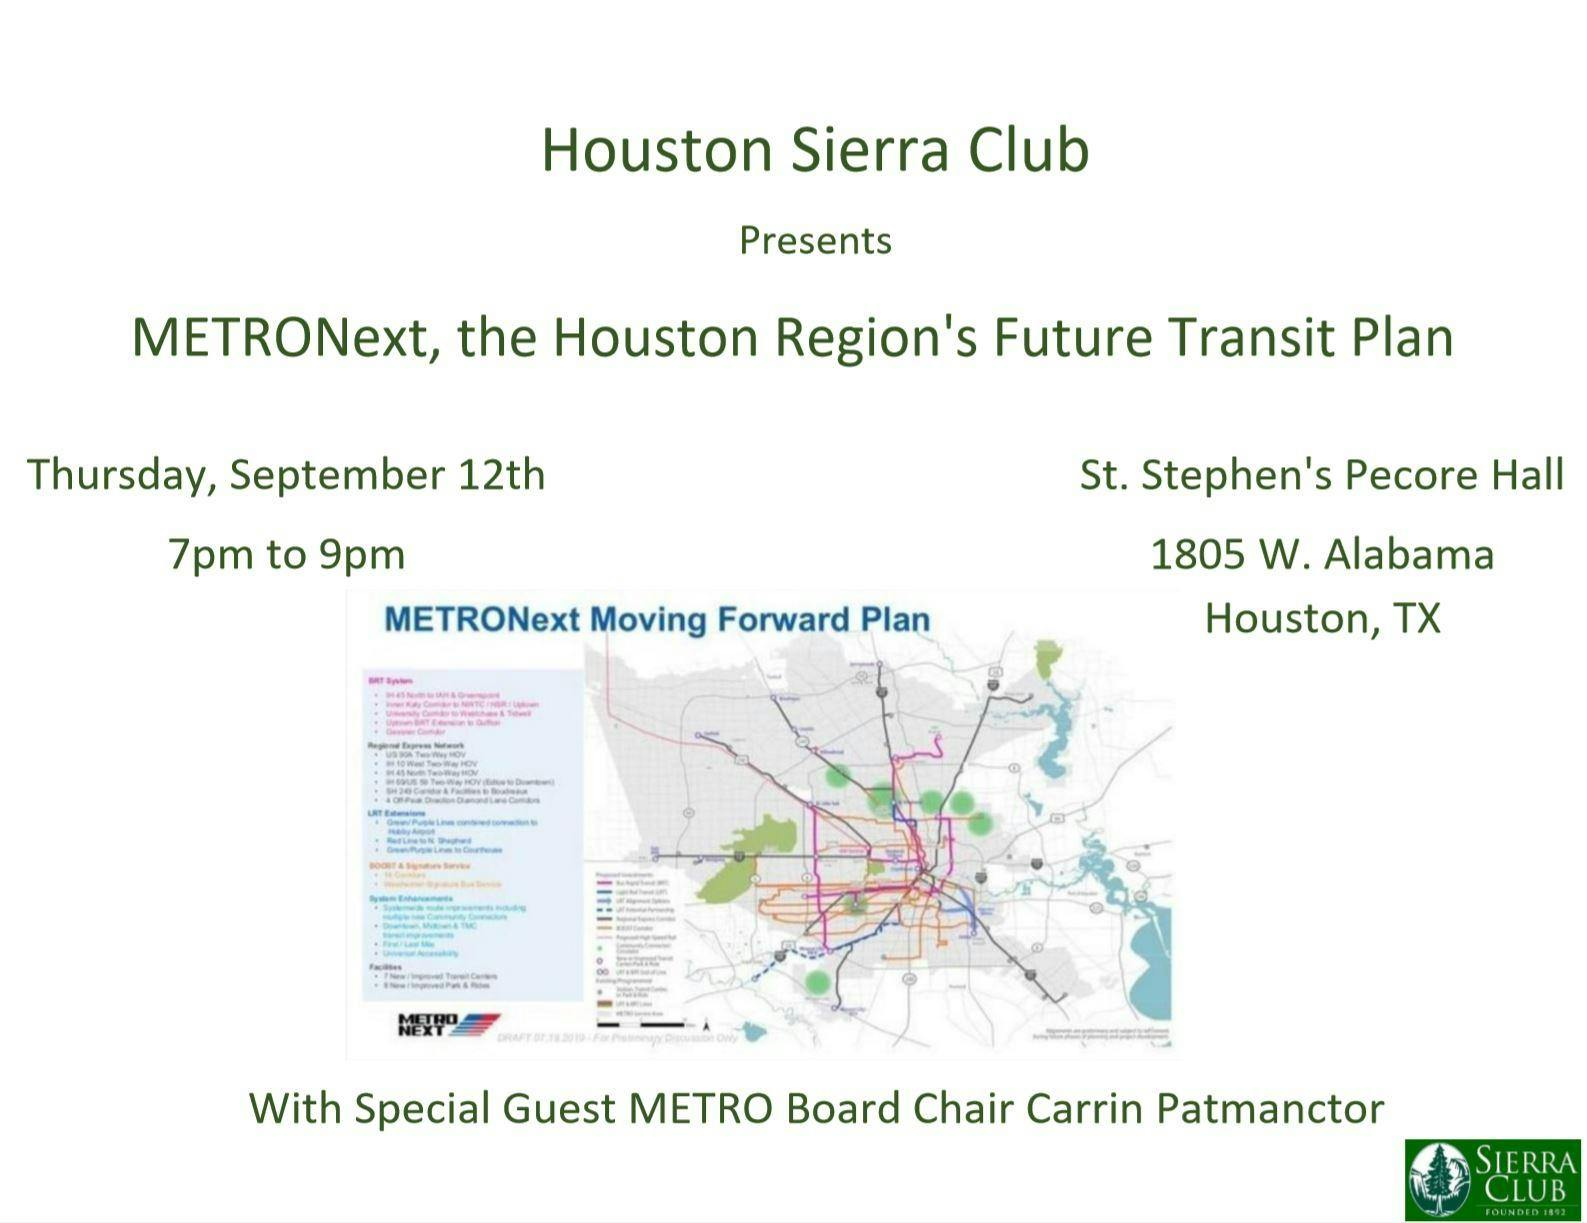 General Monthly Meeting: METRONext the Houston Region's Future Transit Plan